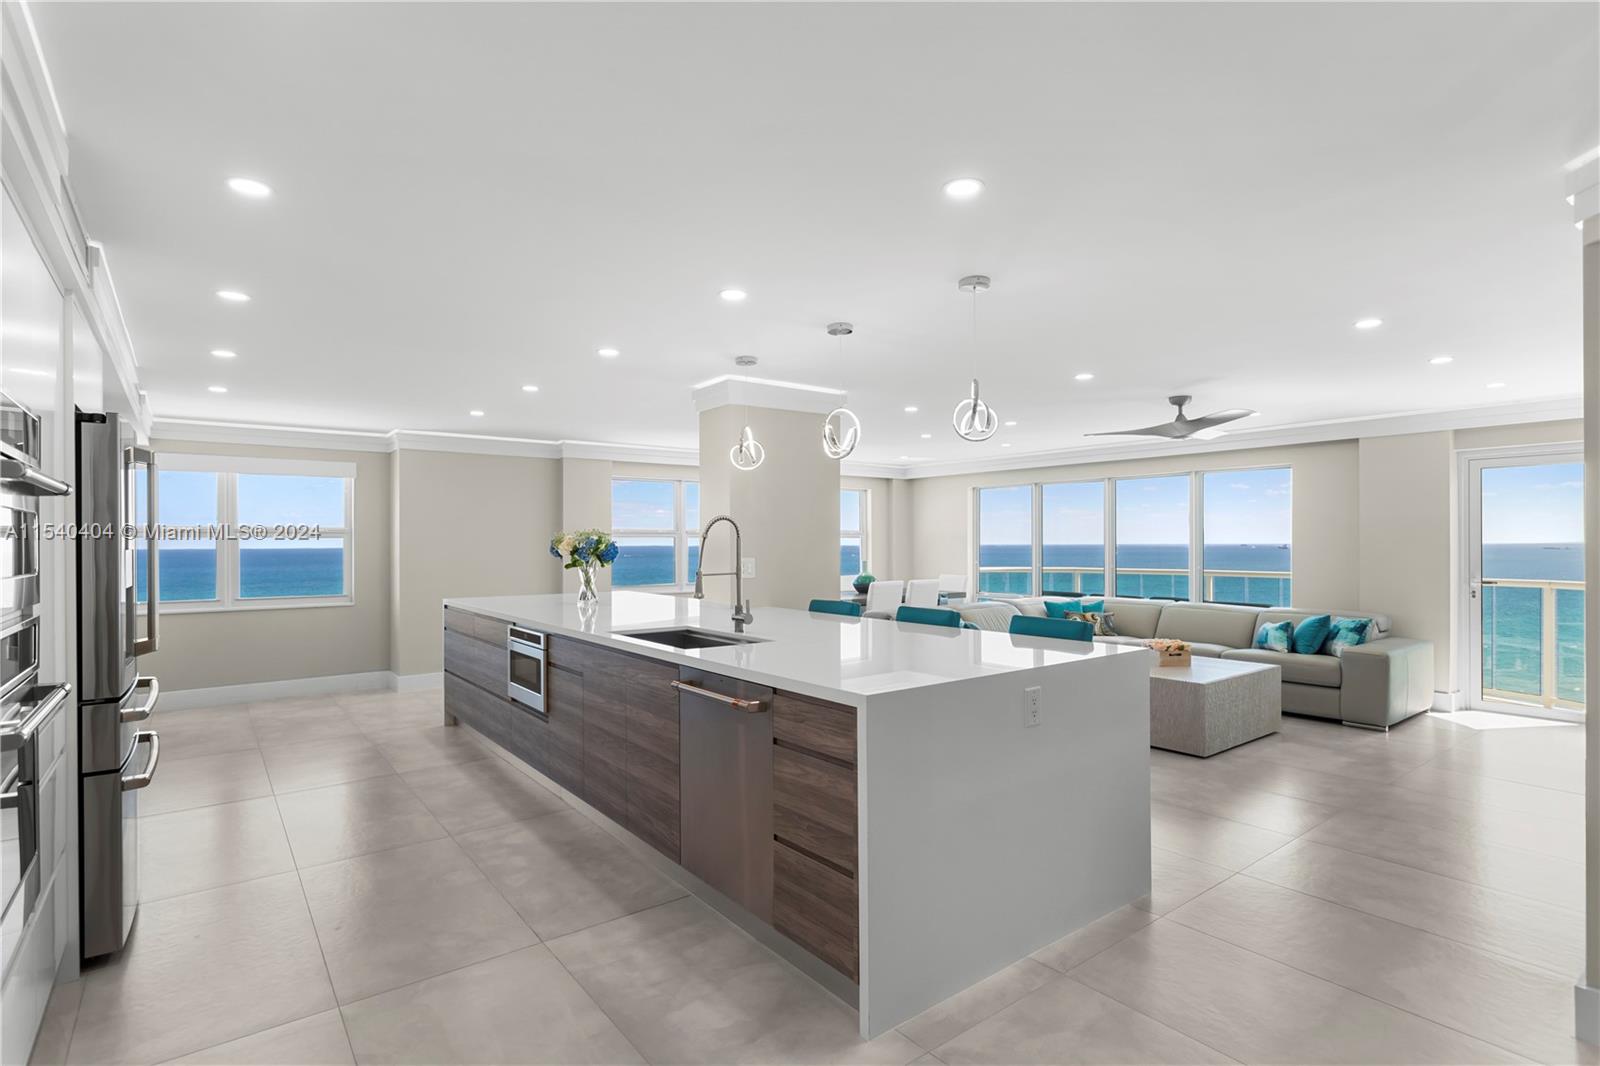 Property for Sale at 3410 Galt Ocean Dr 1702N, Fort Lauderdale, Broward County, Florida - Bedrooms: 2 
Bathrooms: 2  - $1,500,000